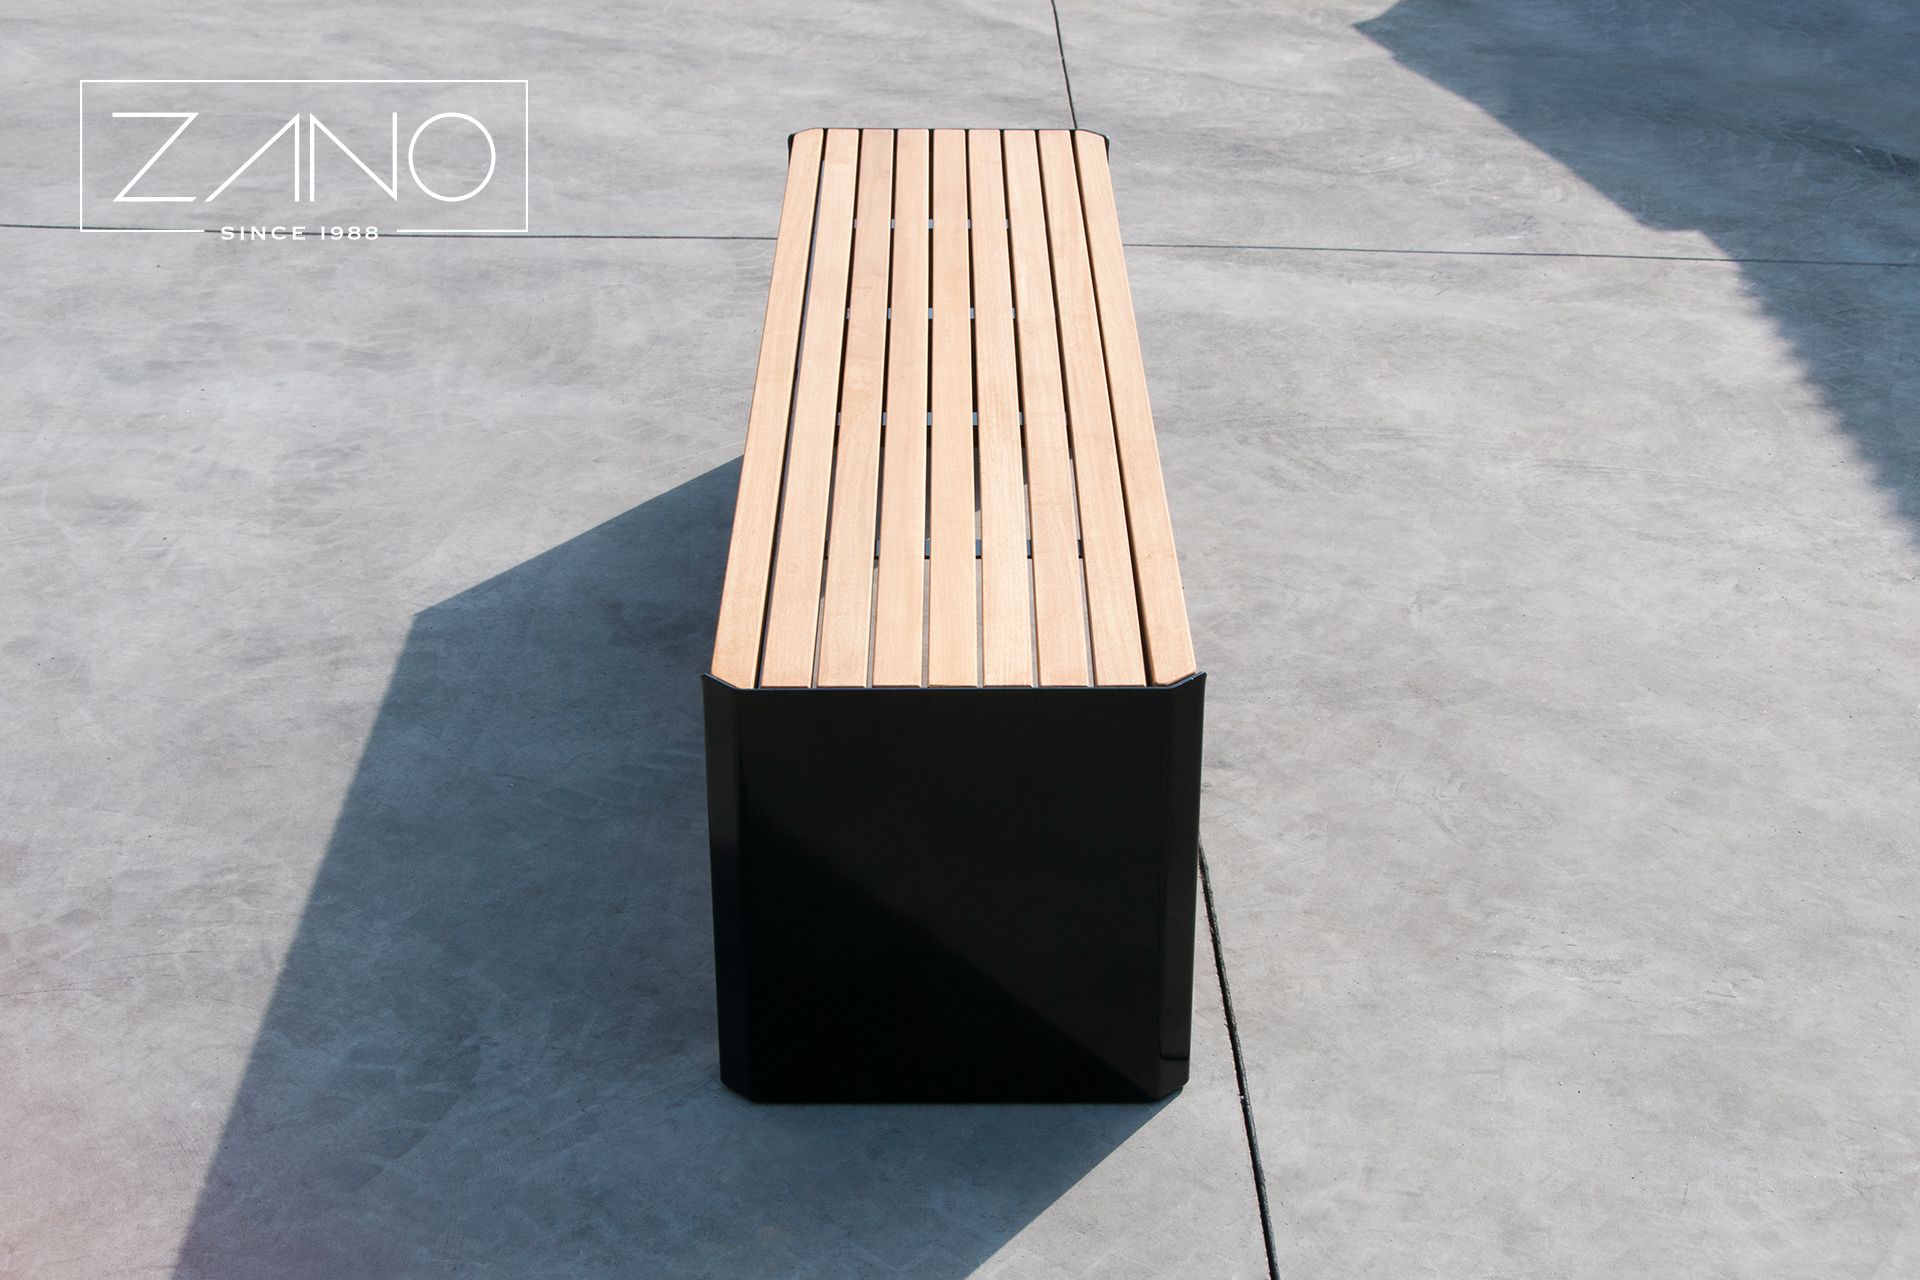 Contemporary urban bench with minimalist design